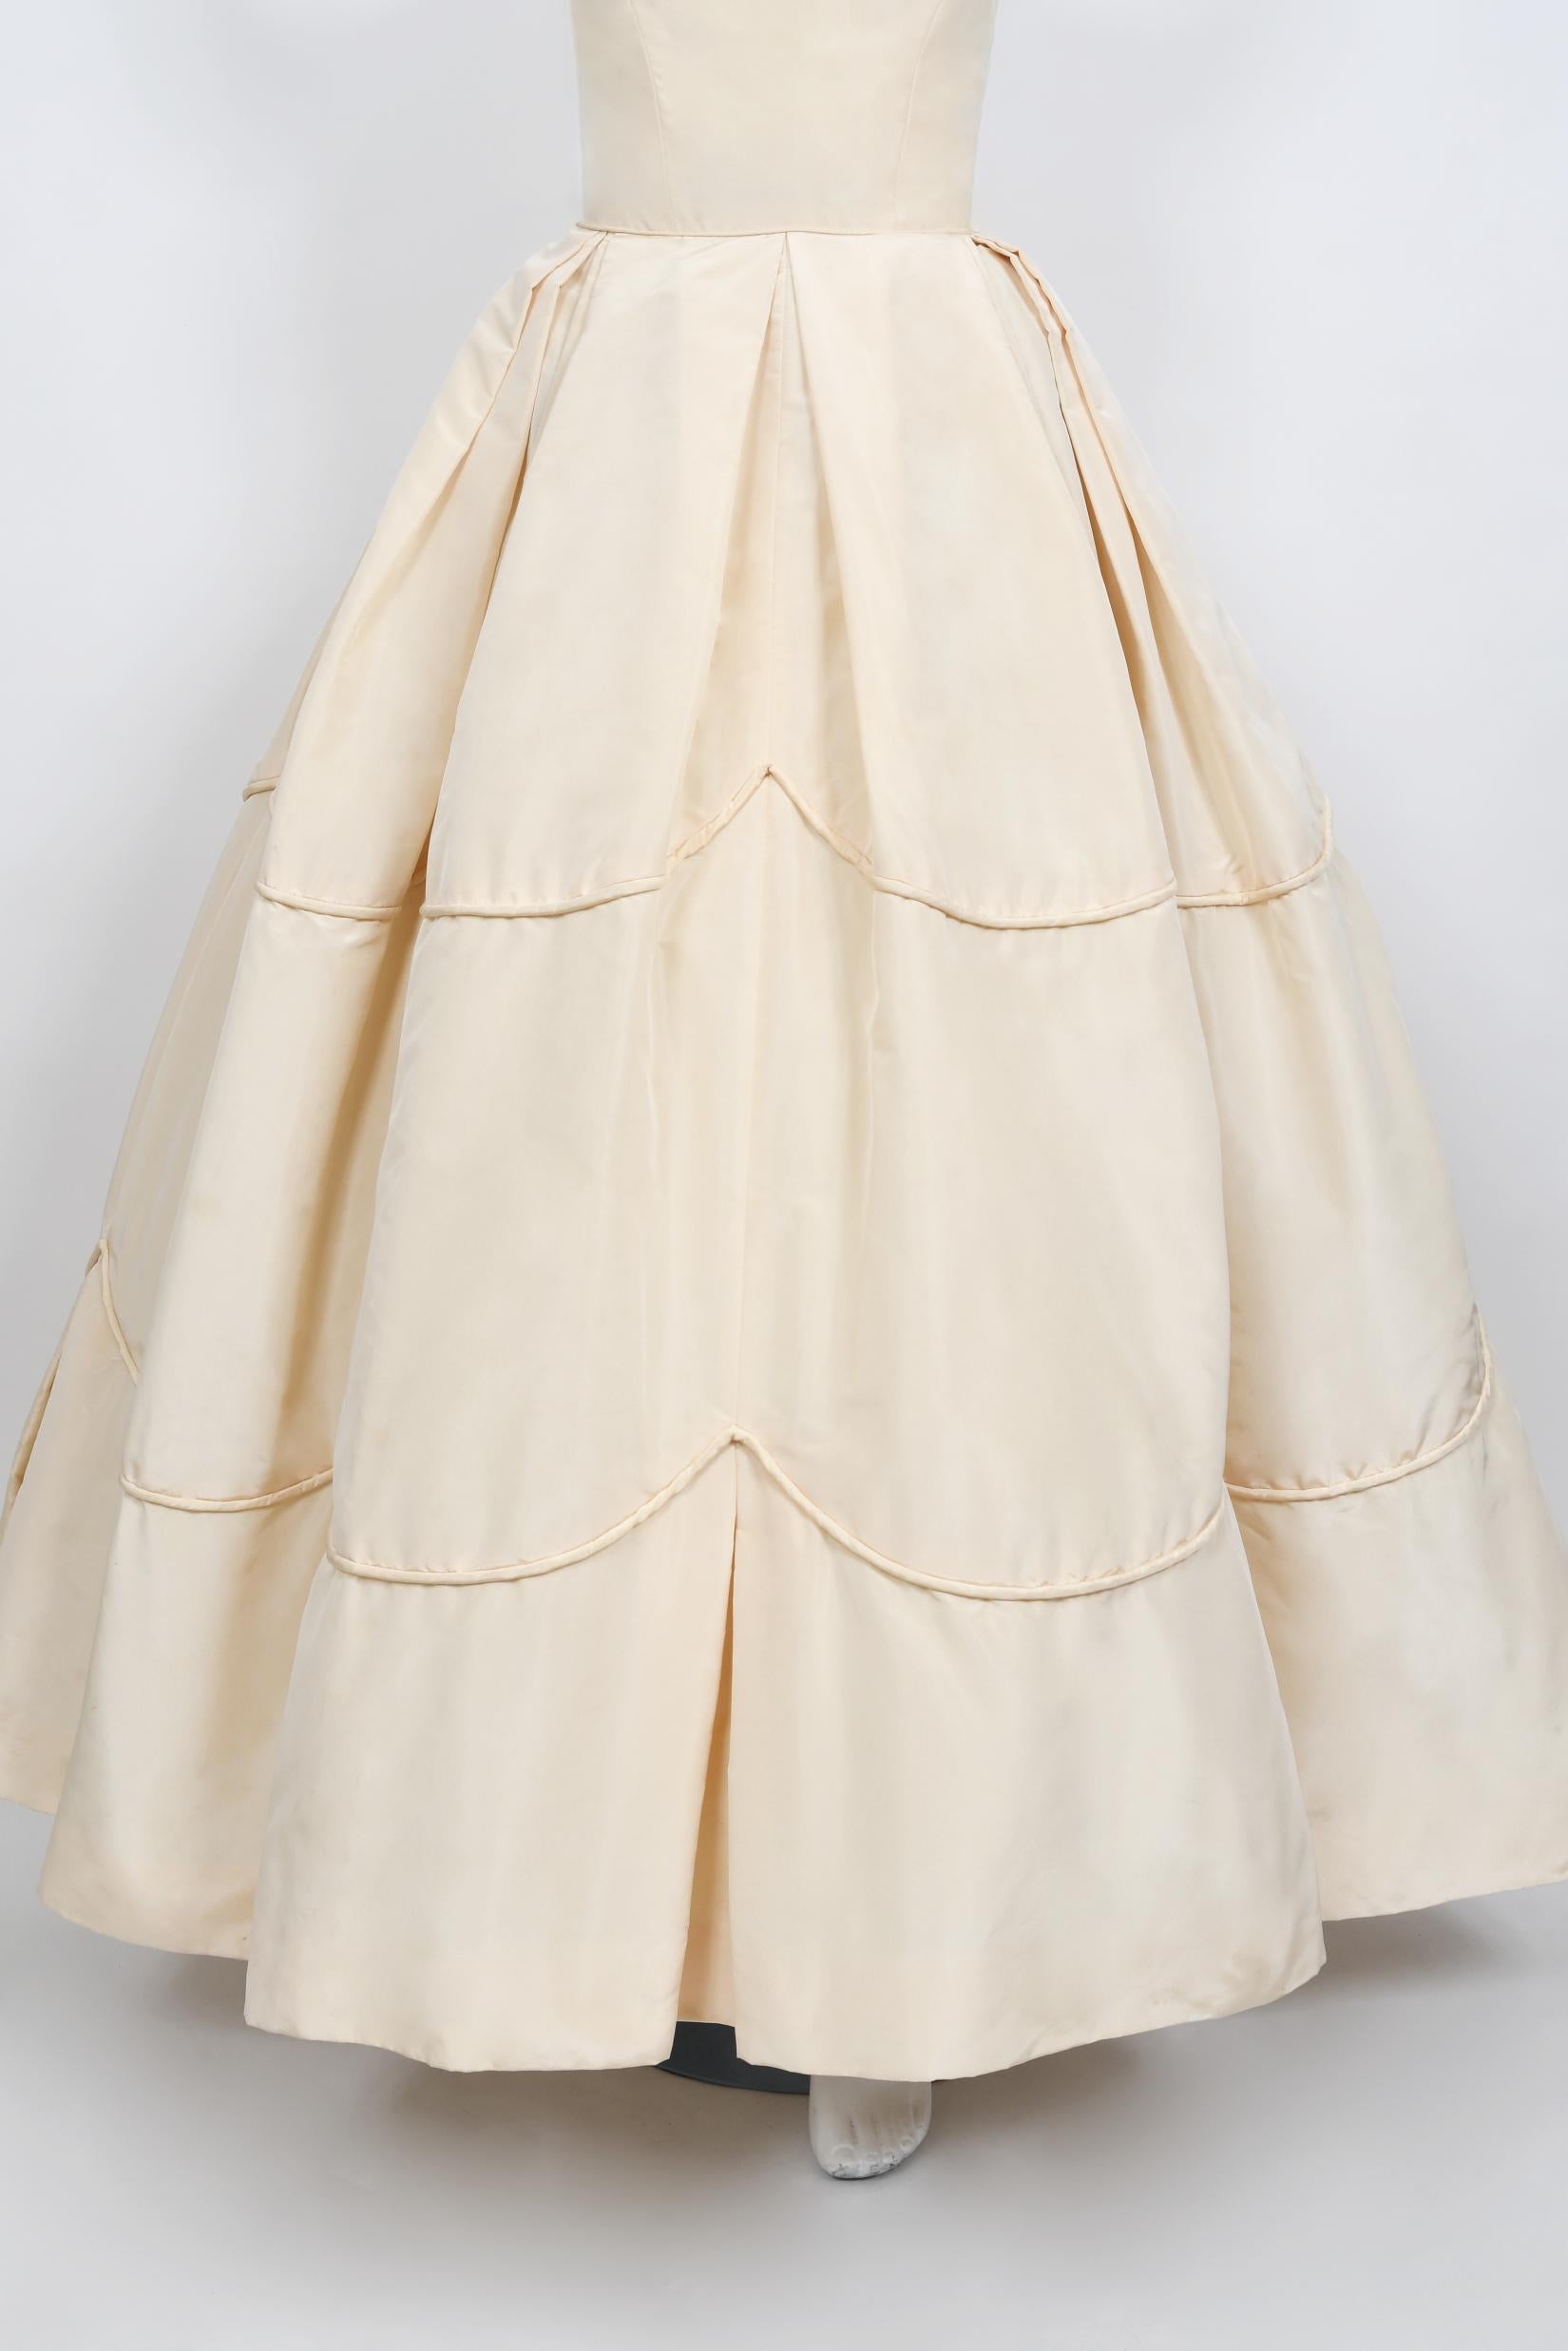 Vintage 1950er Rosalie Macrini Couture Cremefarbenes trägerloses Braut-/Hochzeitskleid aus Seide   5